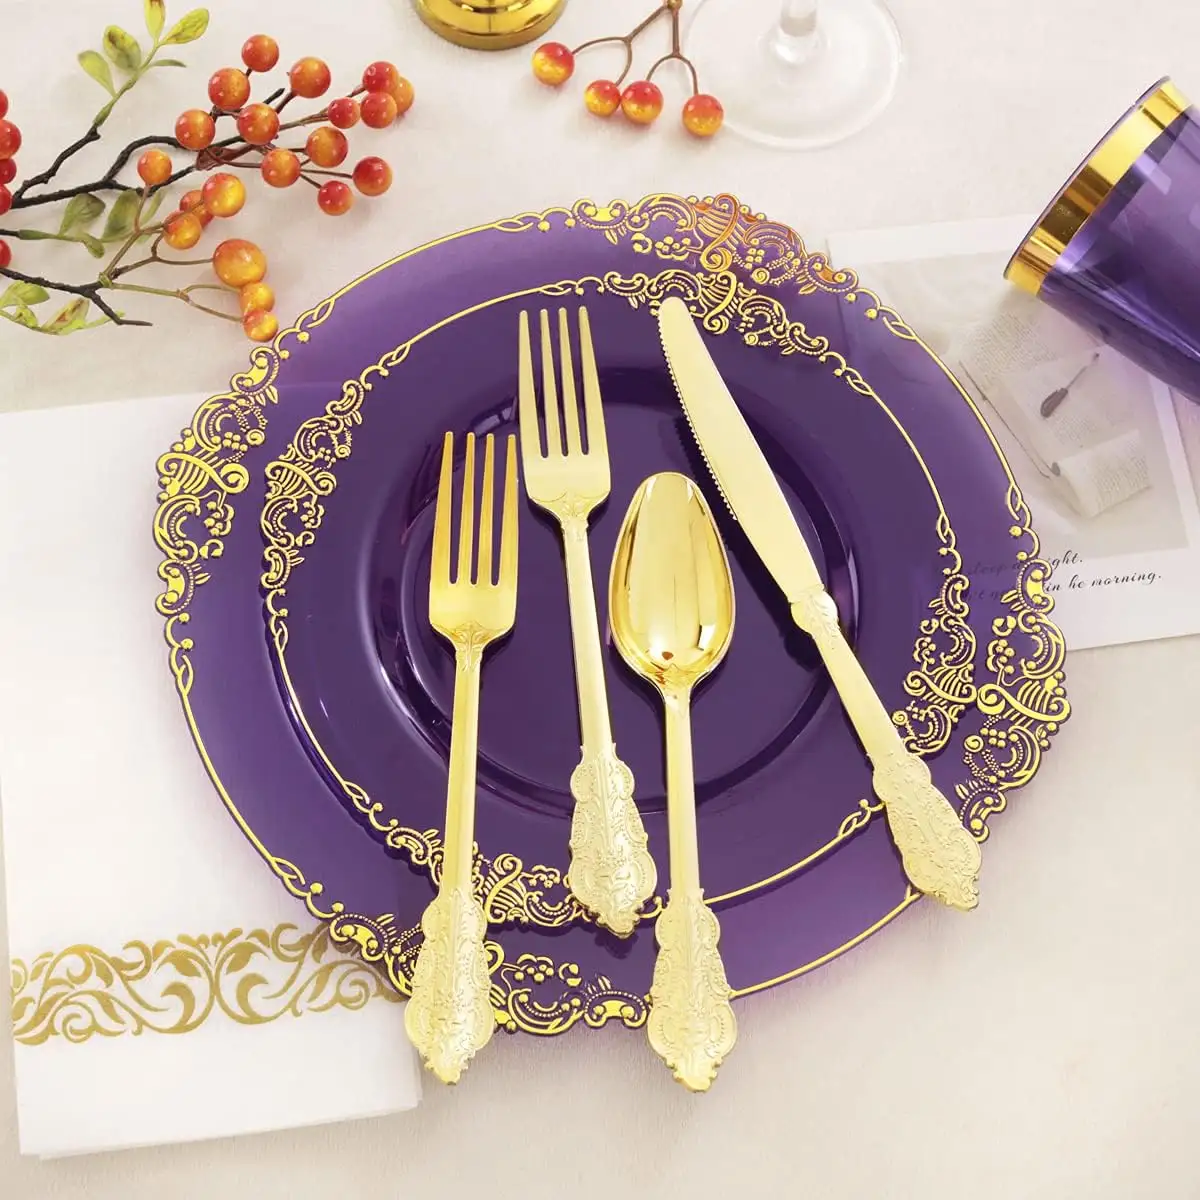 Platos de borde de encaje rosa dorado transparente de lujo platos de cargador de plástico Premium platos de cena desechables de boda